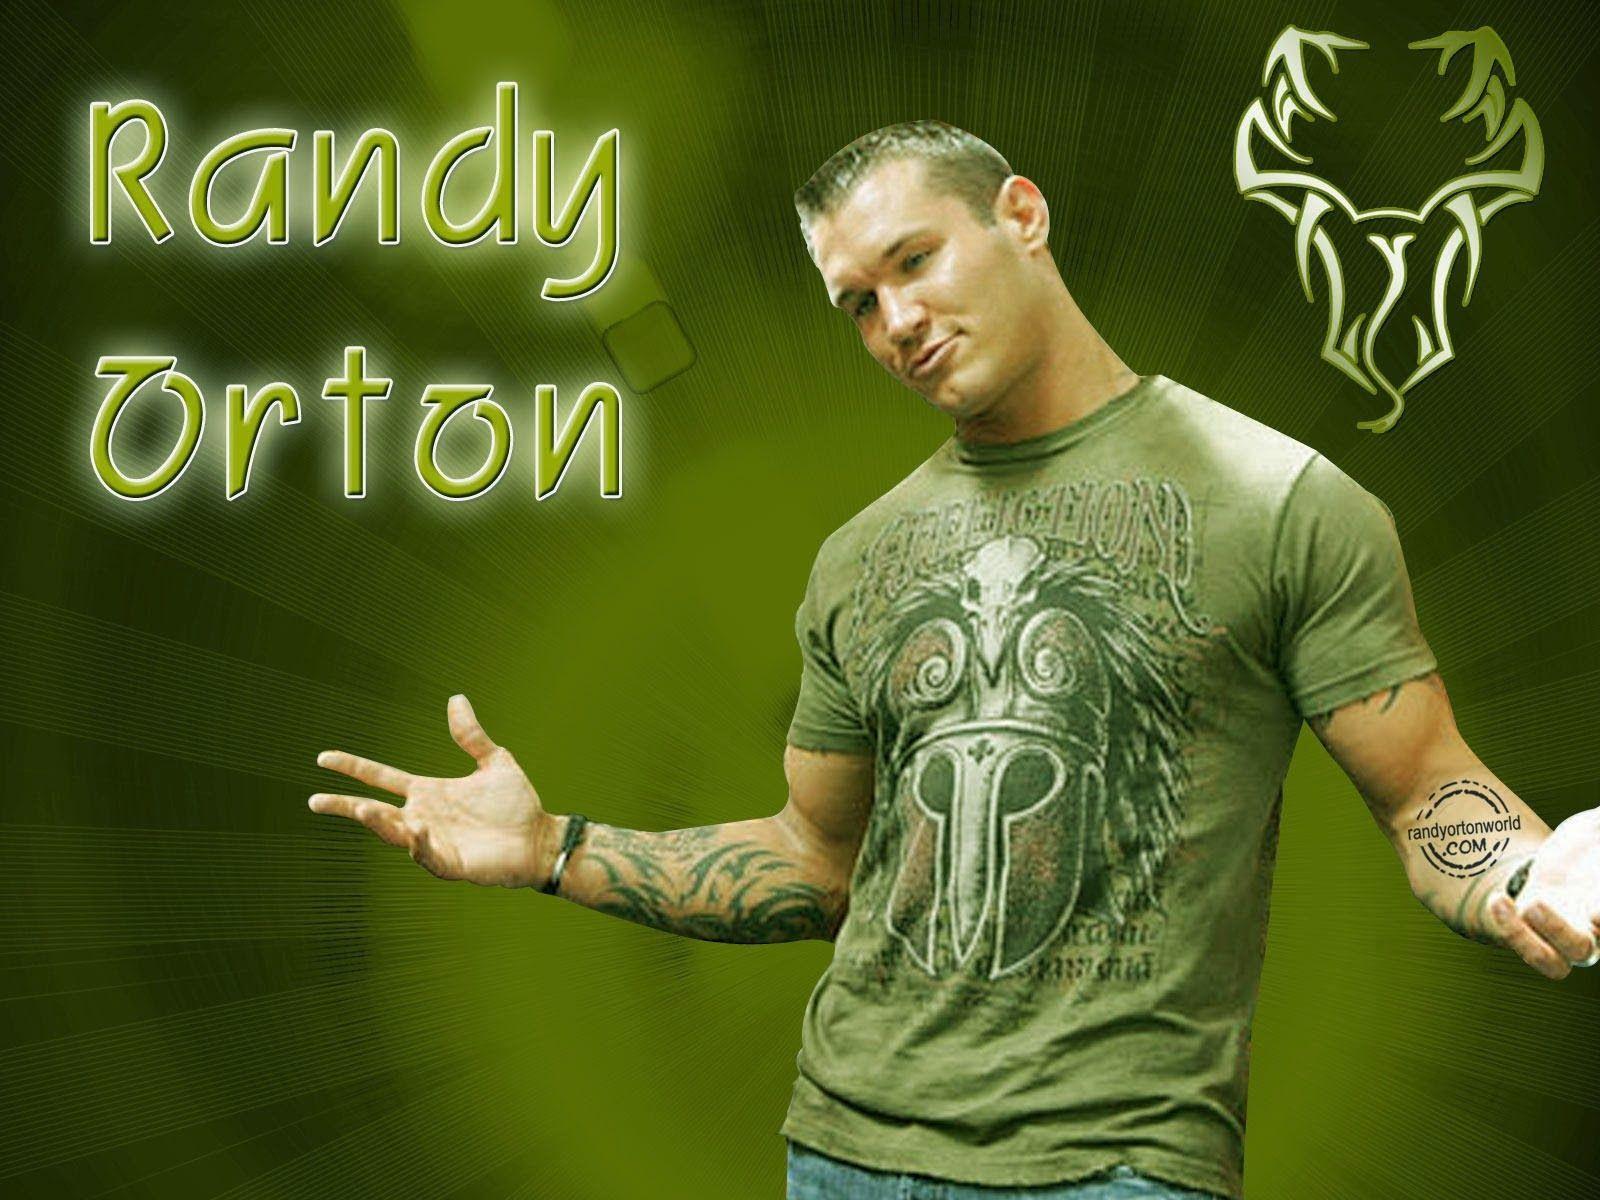 Randy Orton ( The Viper ) HD Wallpaper Wallpaper free